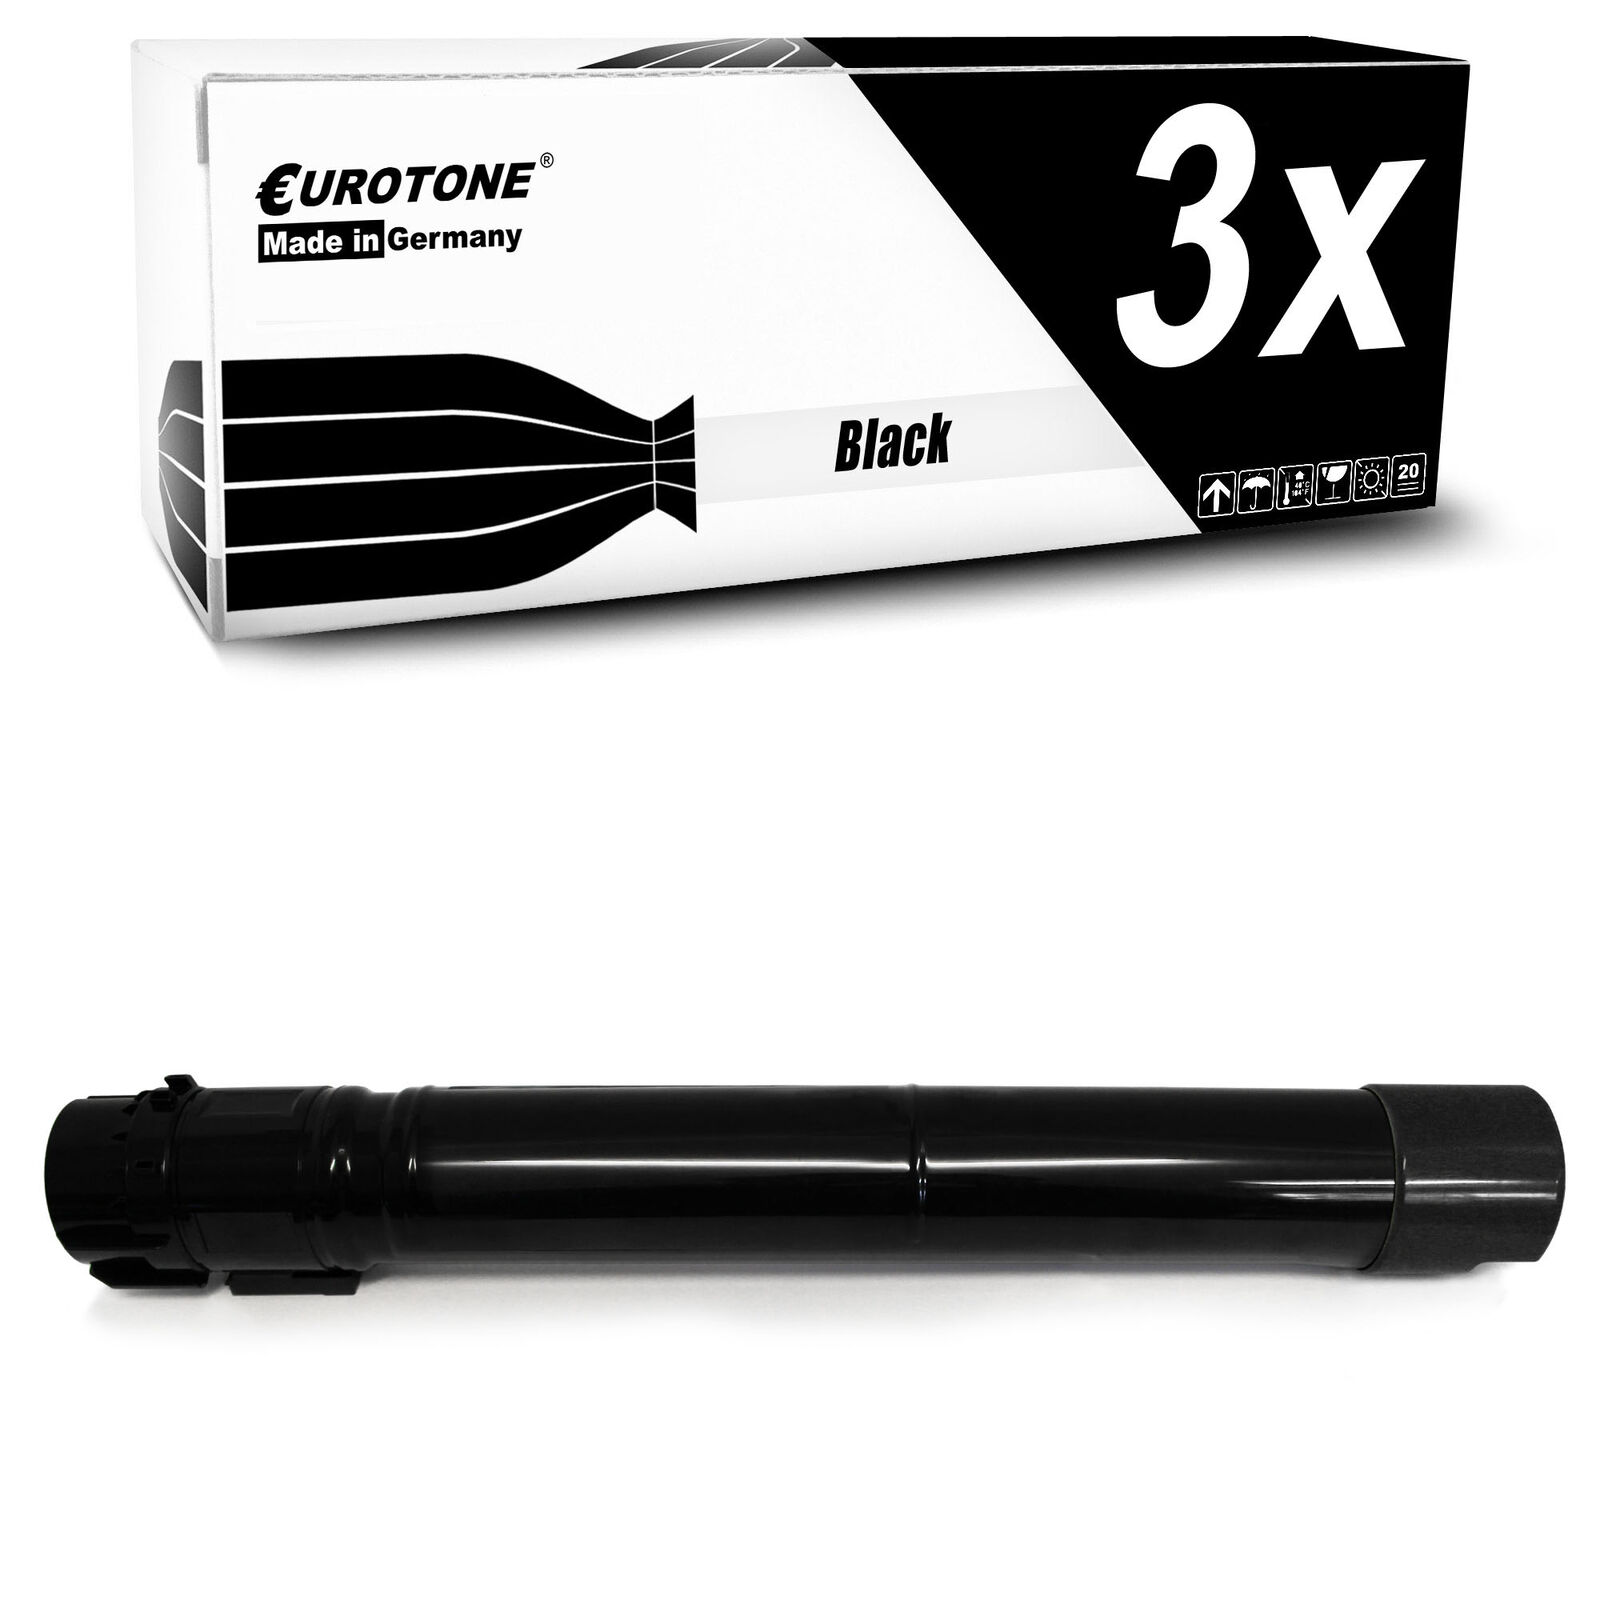 3x Cartridge Black for Lexmark